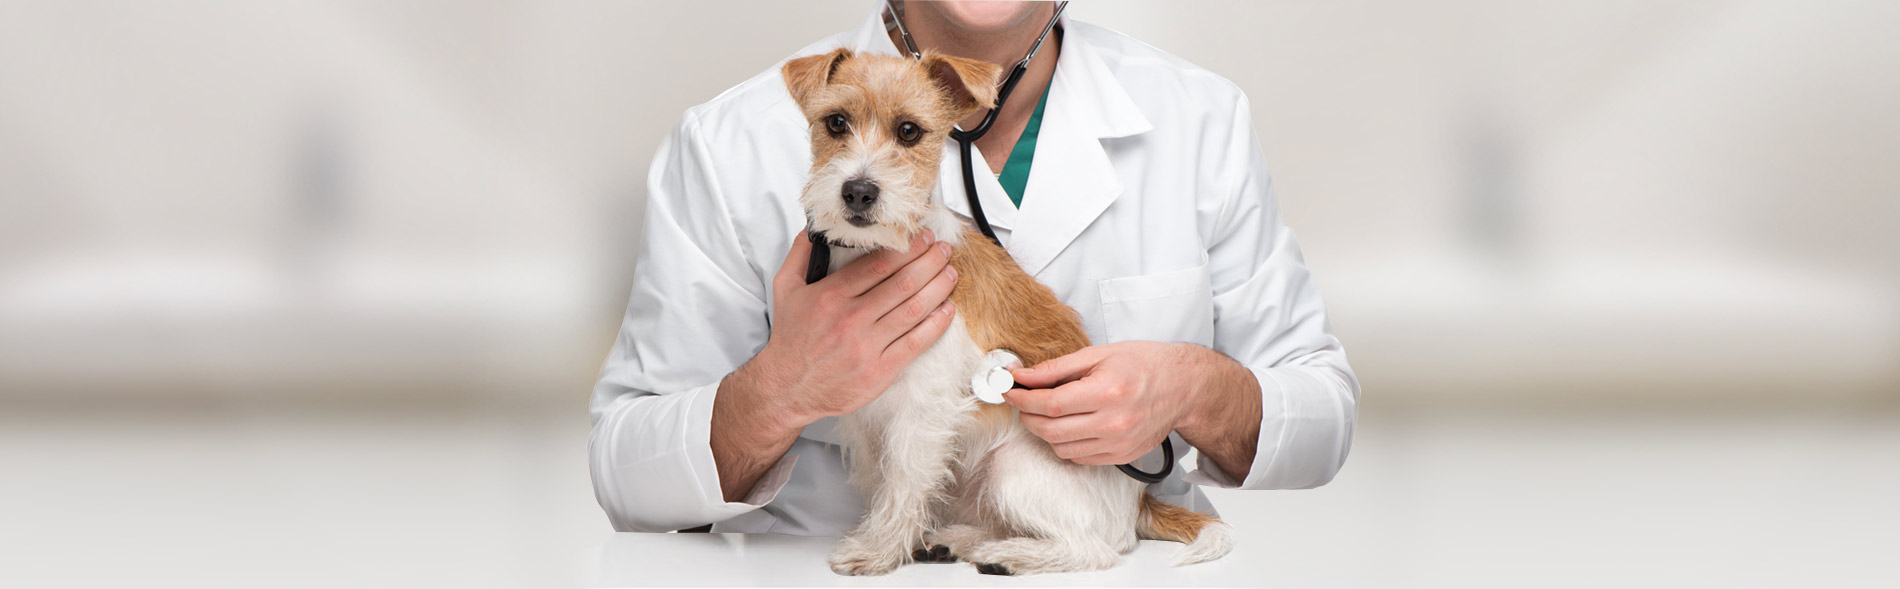 Veterinary Services | Surrey Animal Hospital | Grandview Animal Hospital